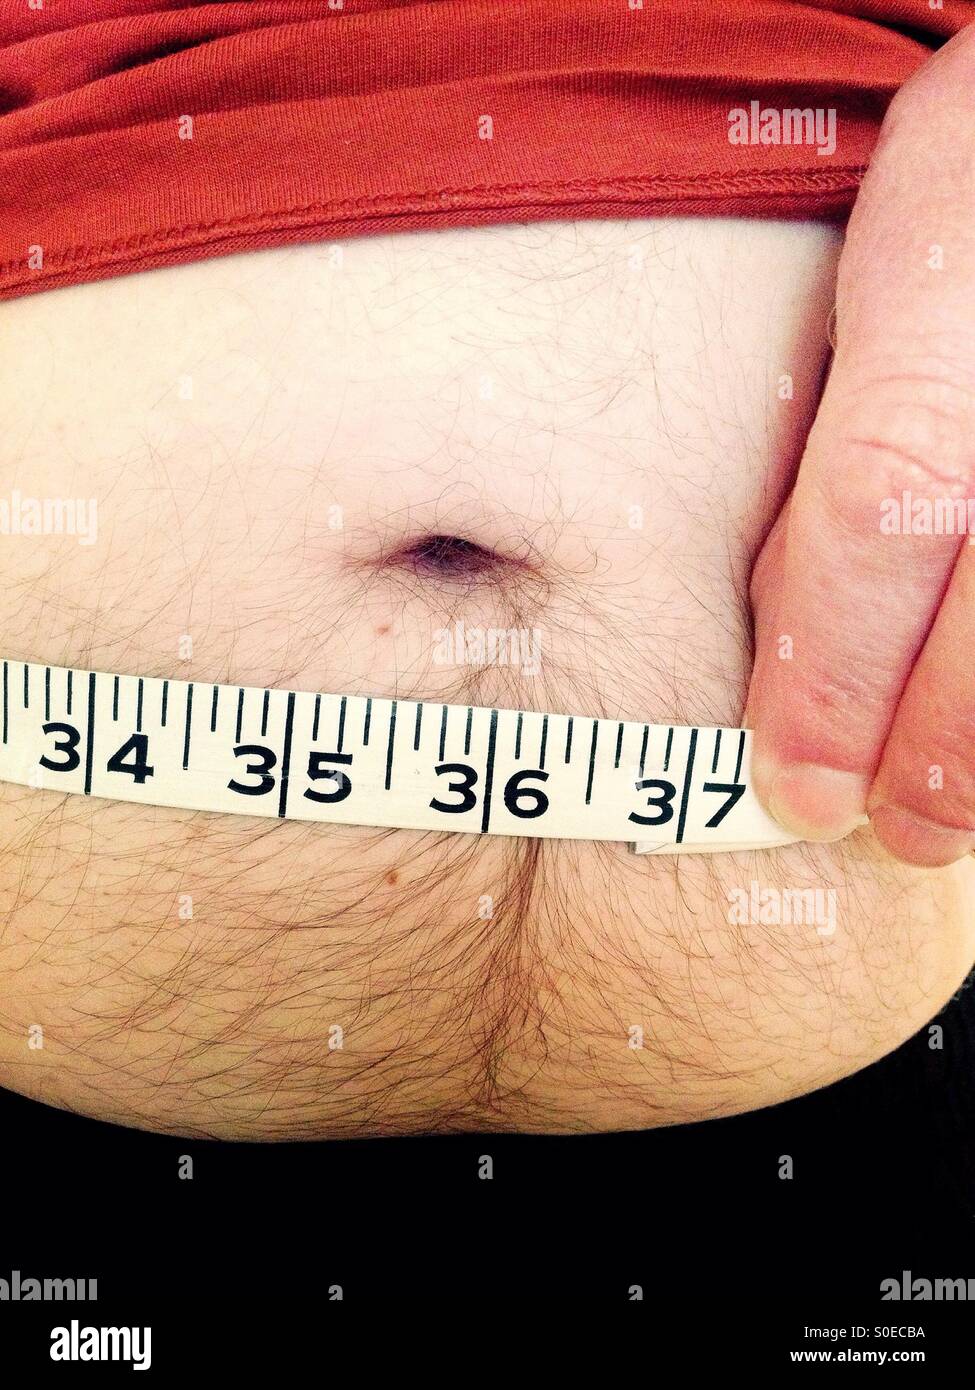 Man measuring his waistline Stock Photo